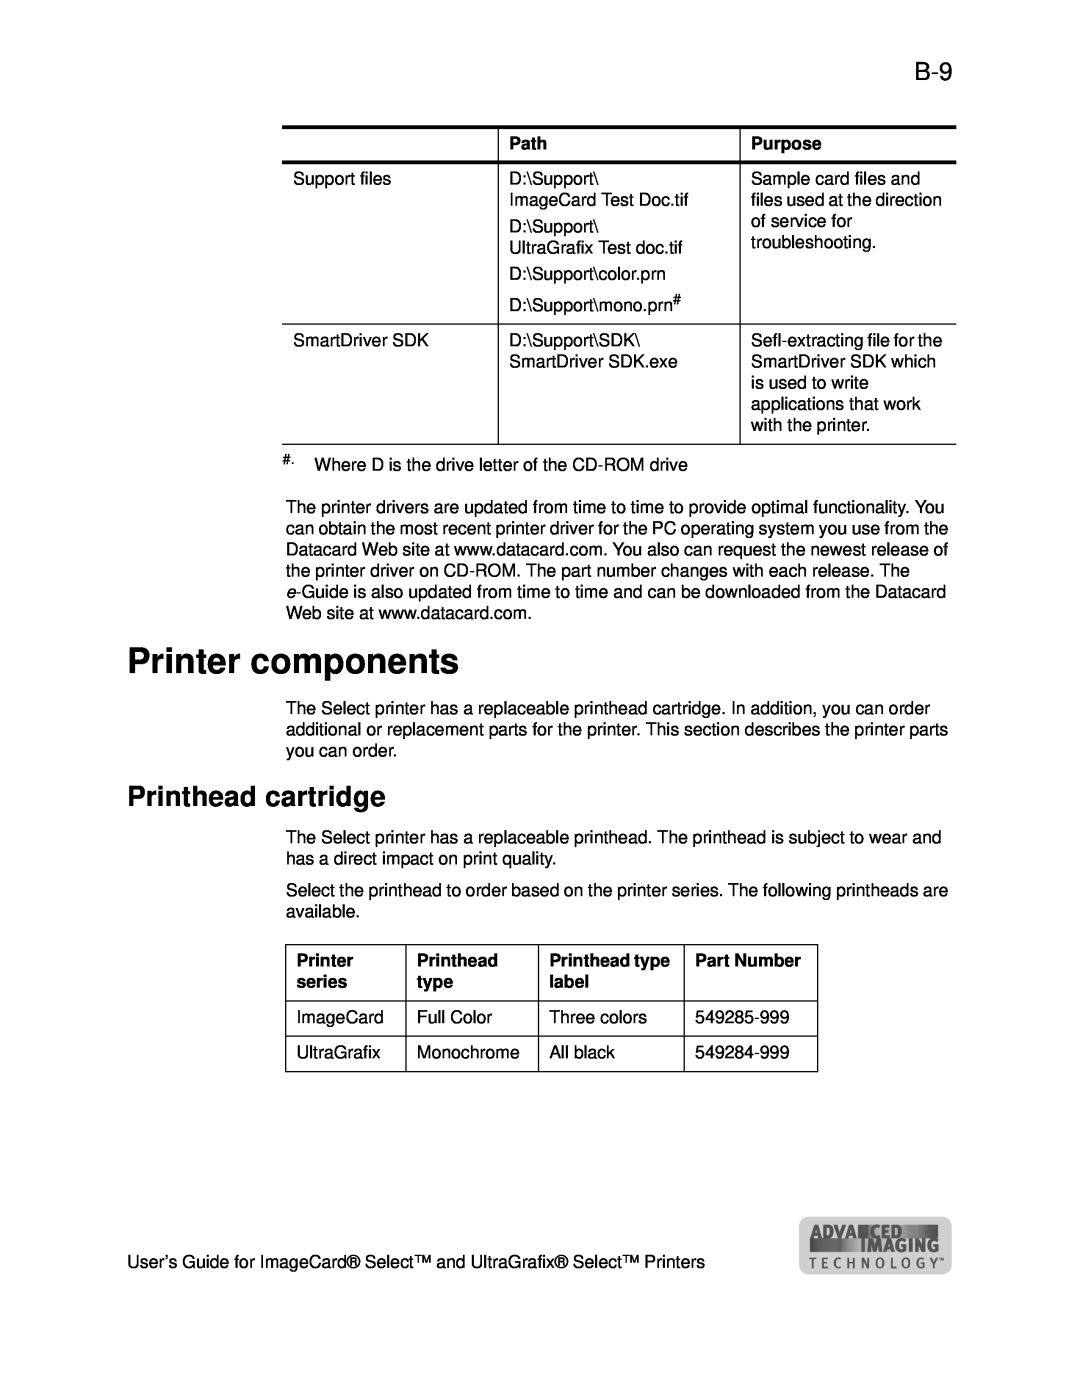 Datacard Group ImageCard SelectTM and UltraGrafix SelectTM Printers Printer components, Printhead cartridge, Part Number 